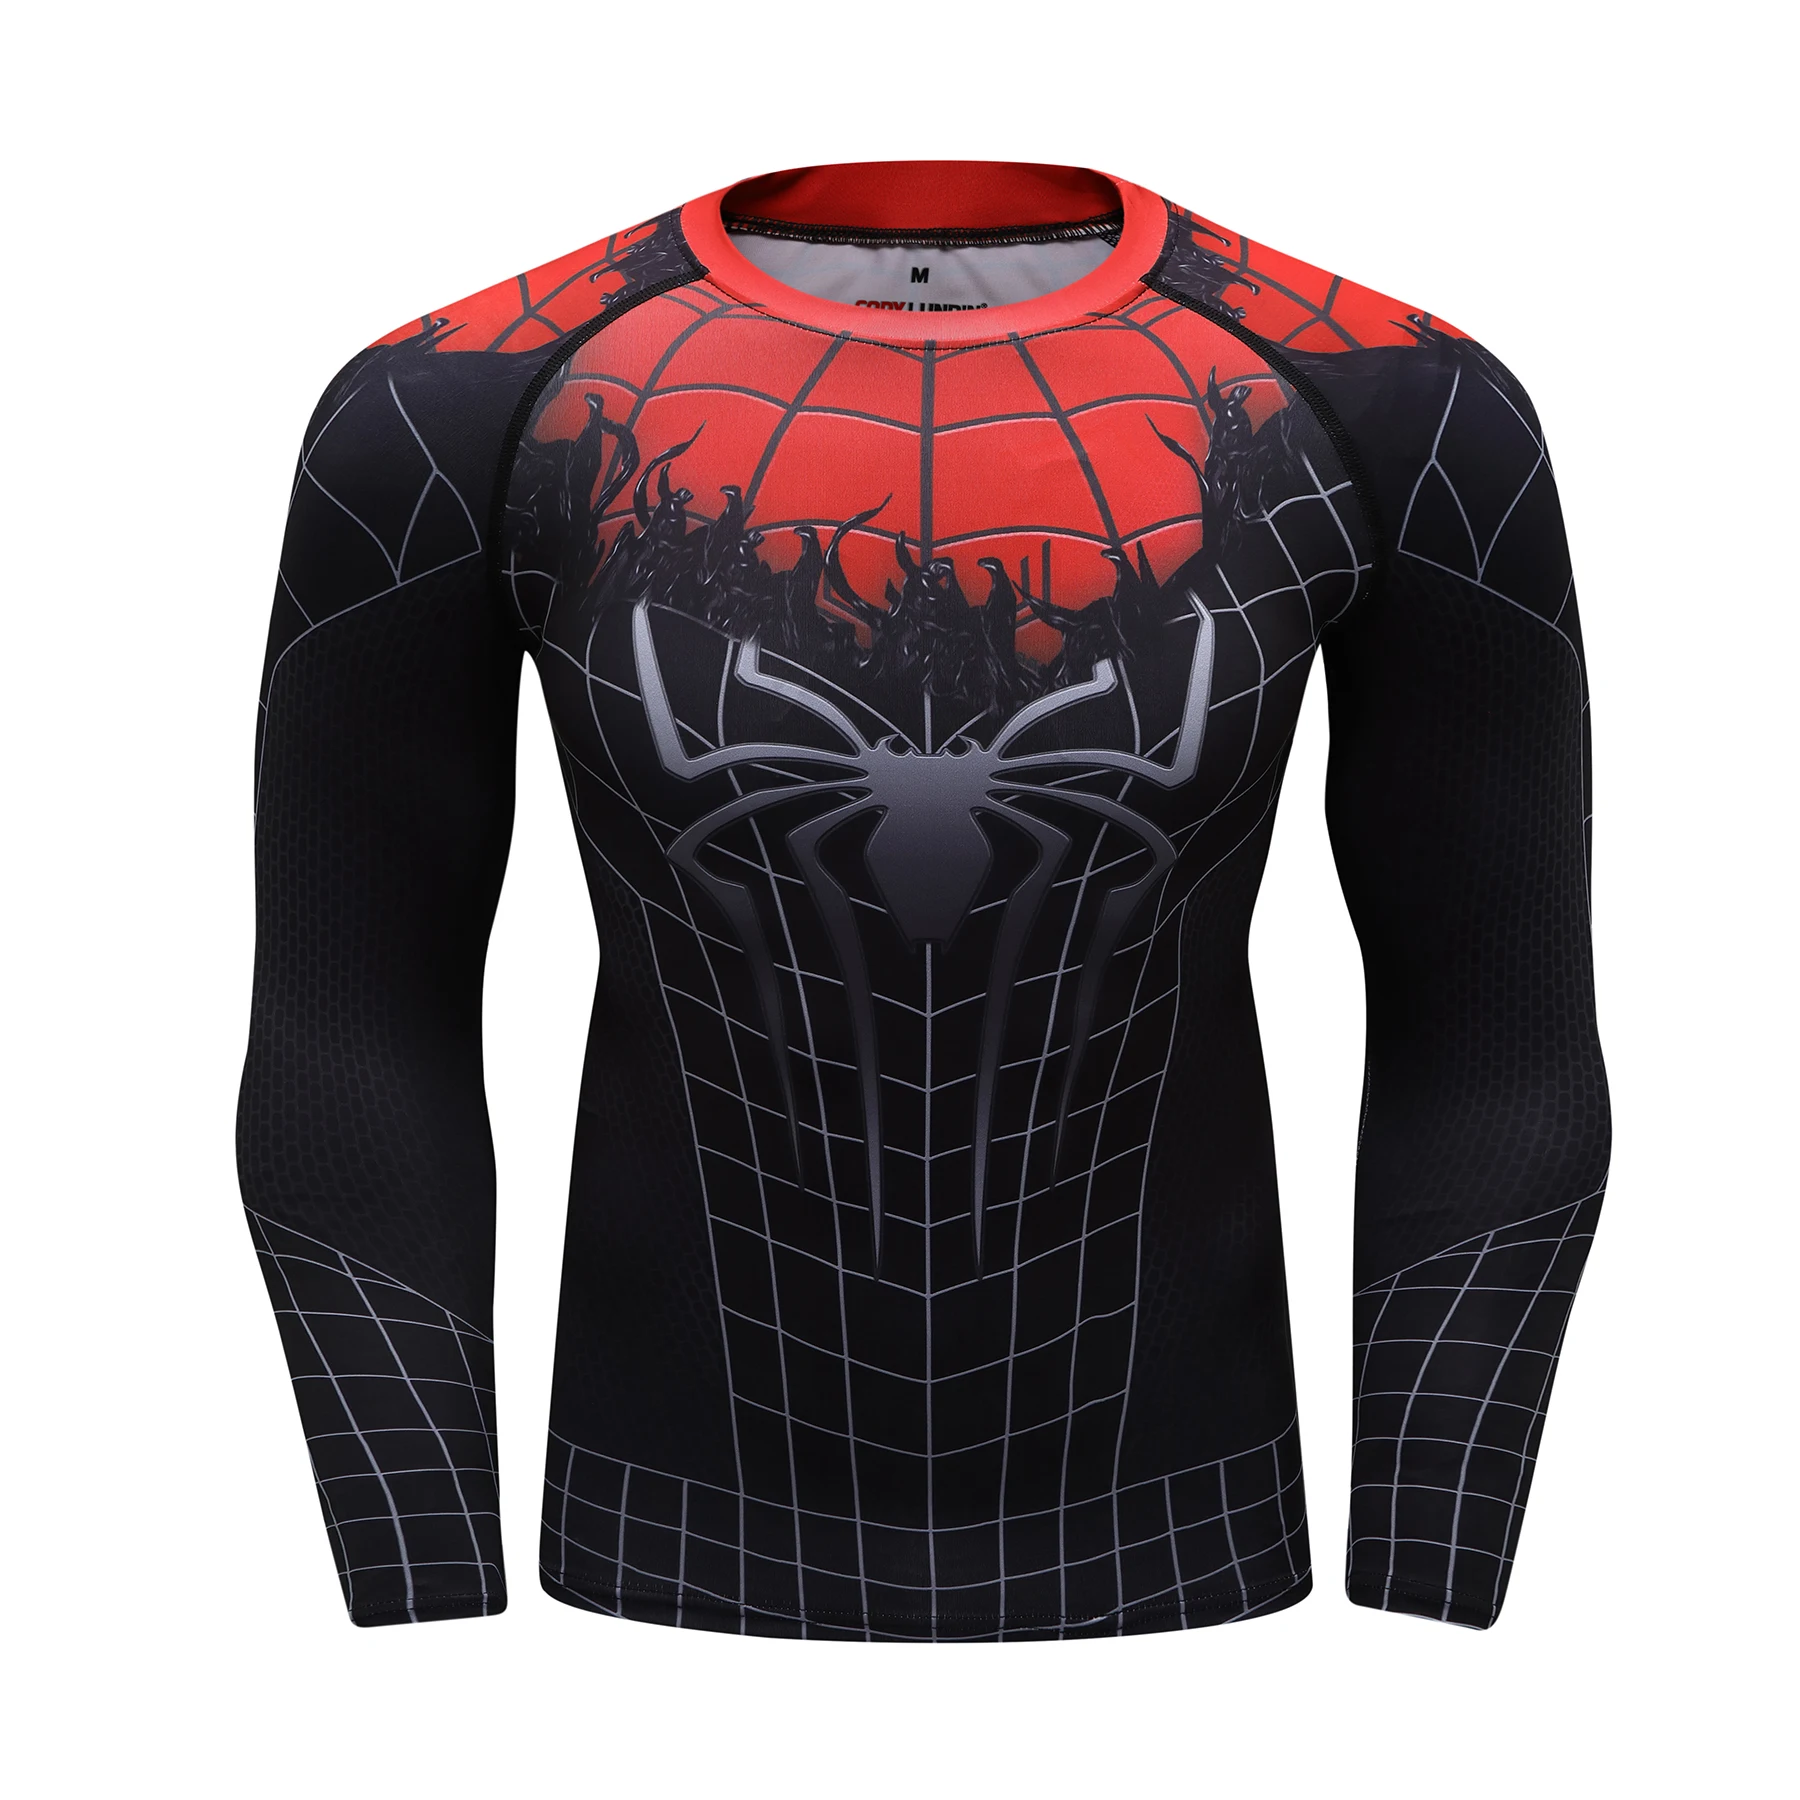 

Cody Lundin Design 3D Superhero Graphic Printed T Shirt Men MMA Rash Guard, Customized colors